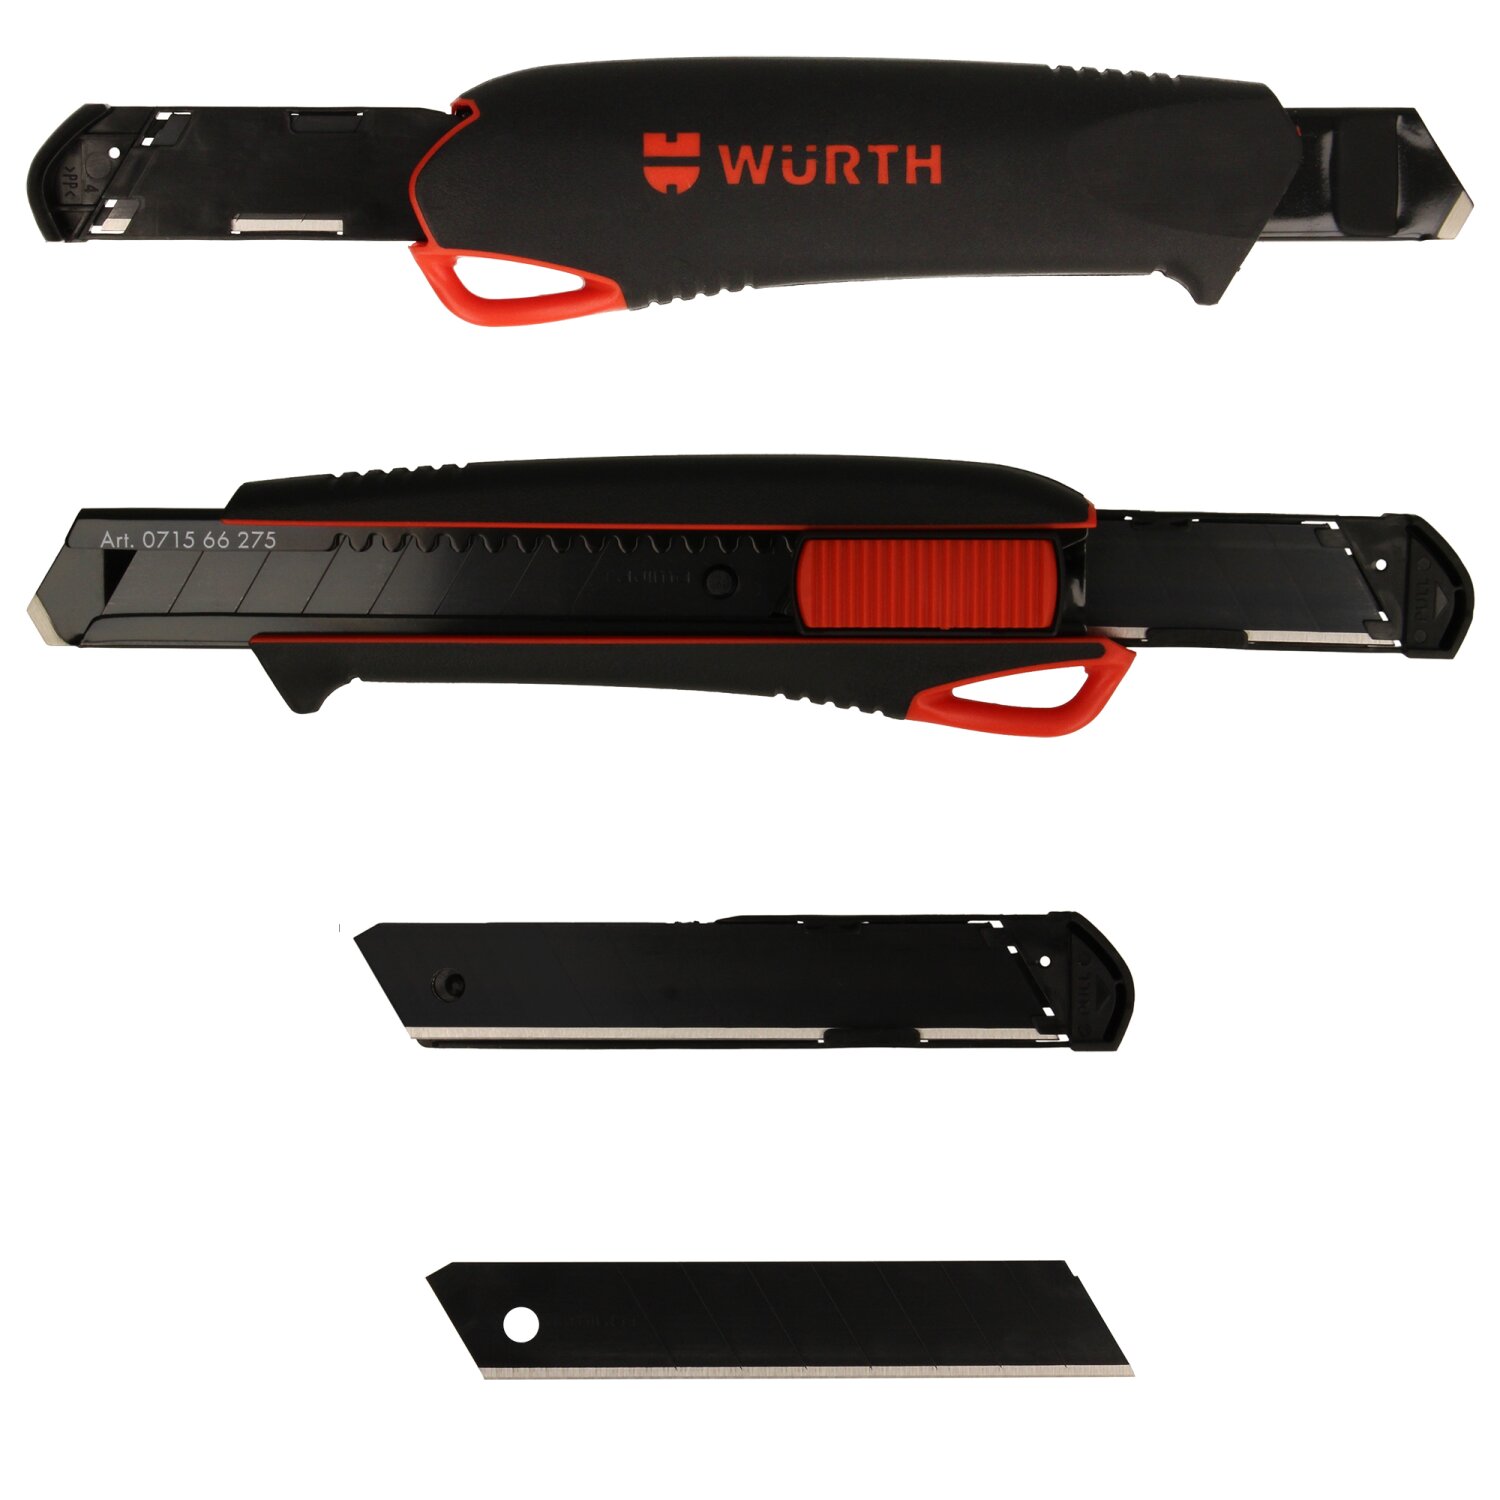 Würth 2x 2K Cutter-Messer mit Schieber incl. 6 Klingen